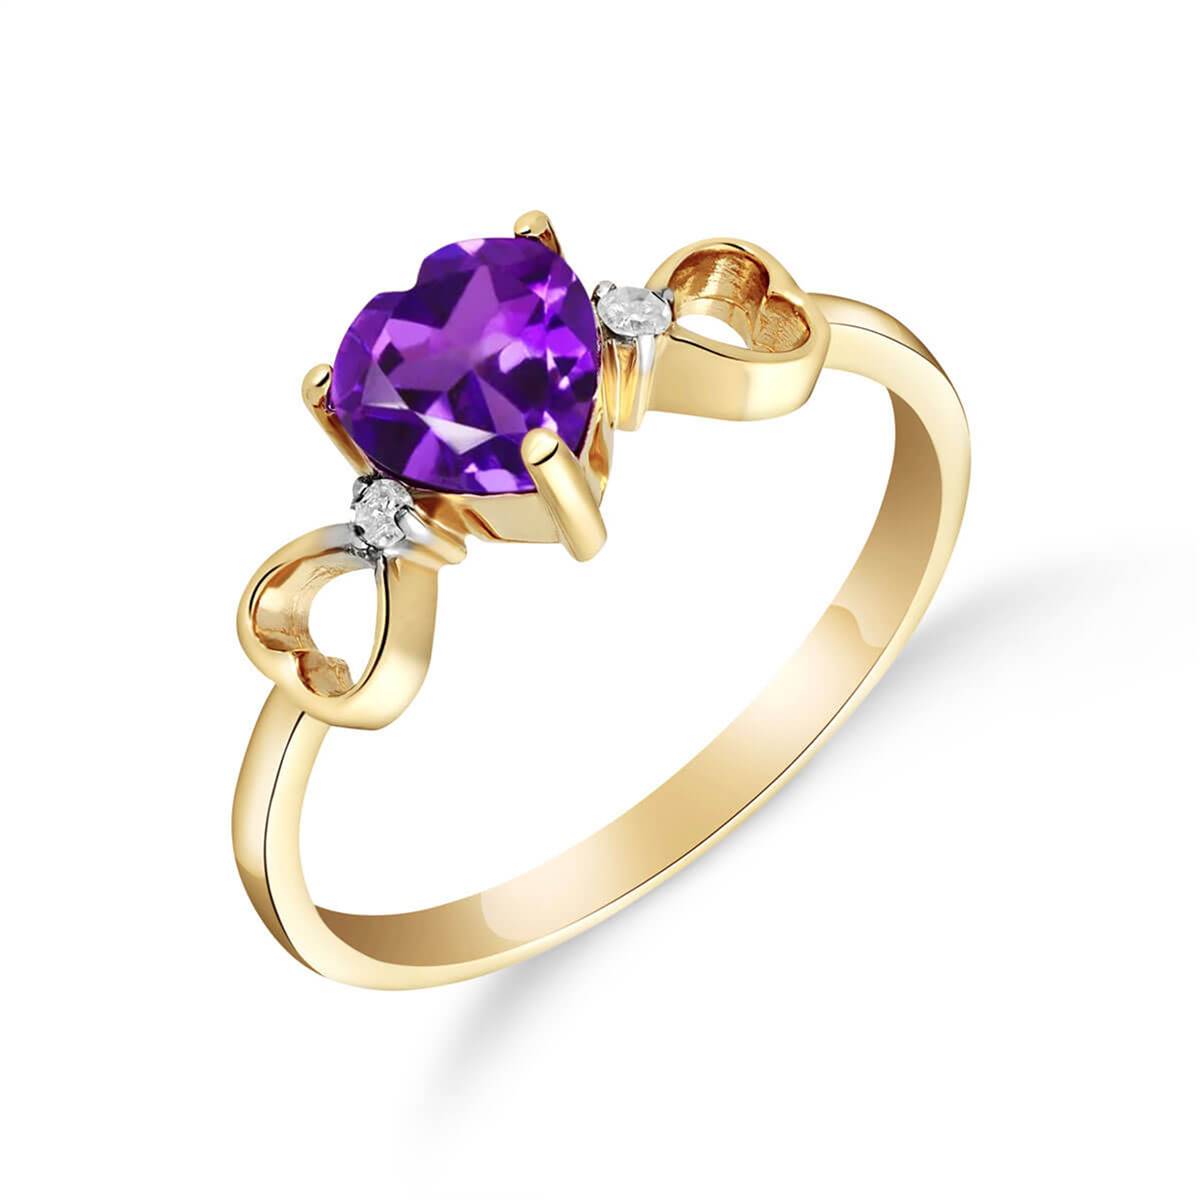 0.96 Carat 14K Solid Yellow Gold Color Me Purple Amethyst Diamond Ring